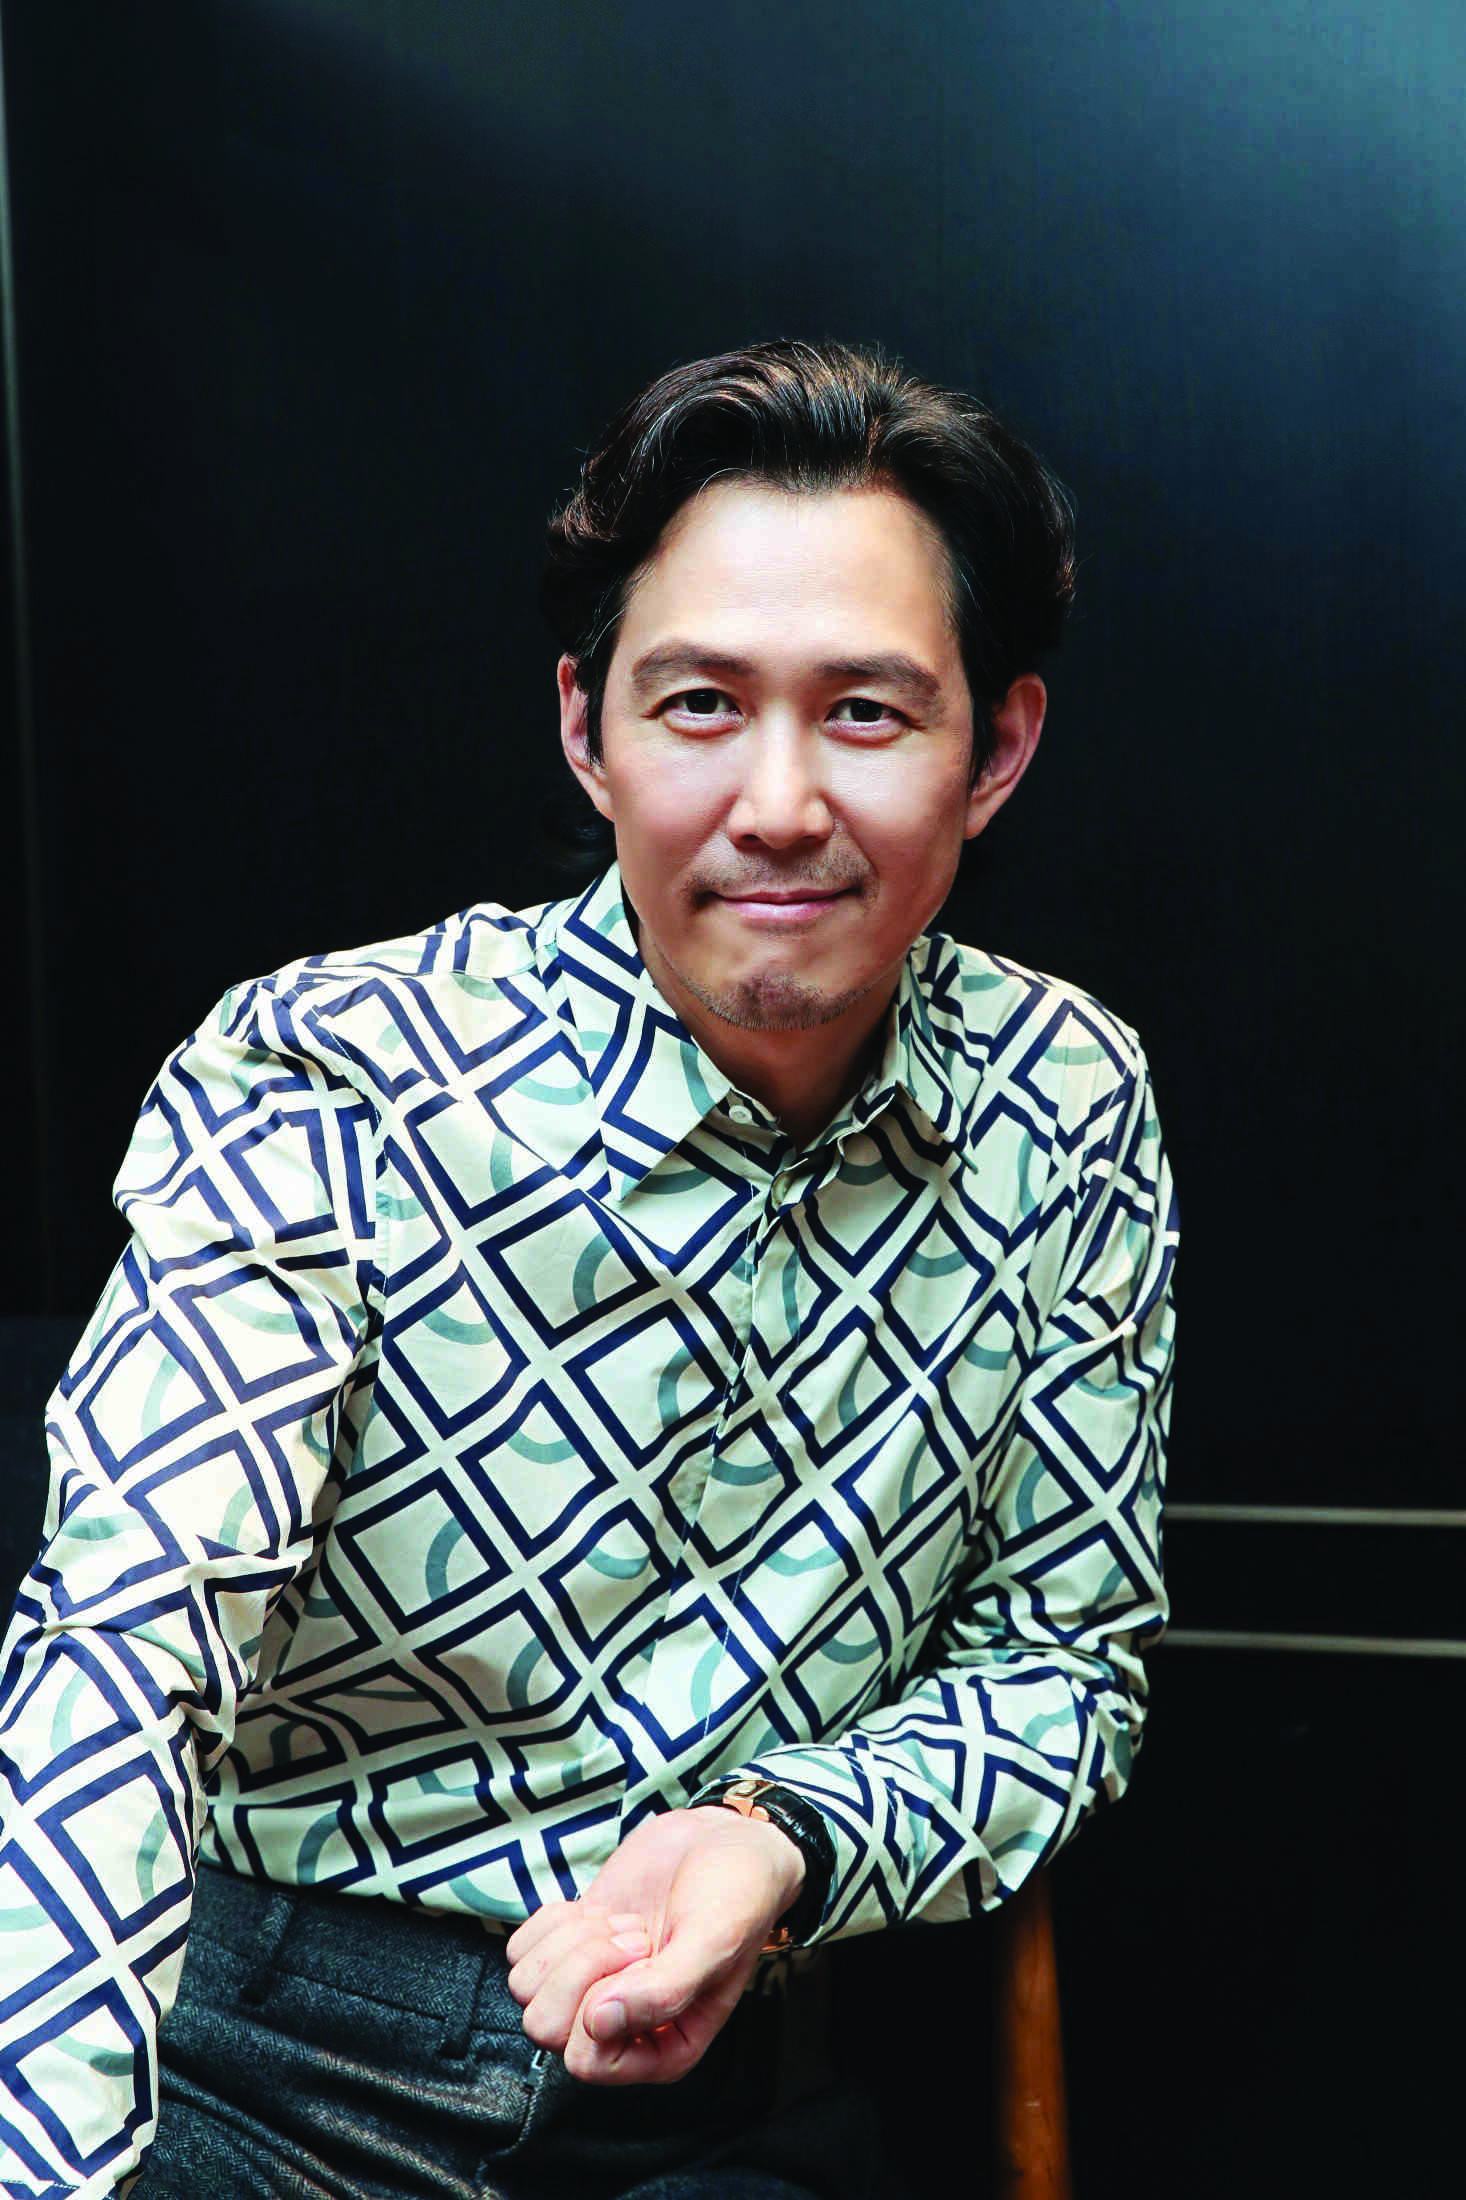 Squid Game star Lee Jung Jae to boycott Golden Globes 2022